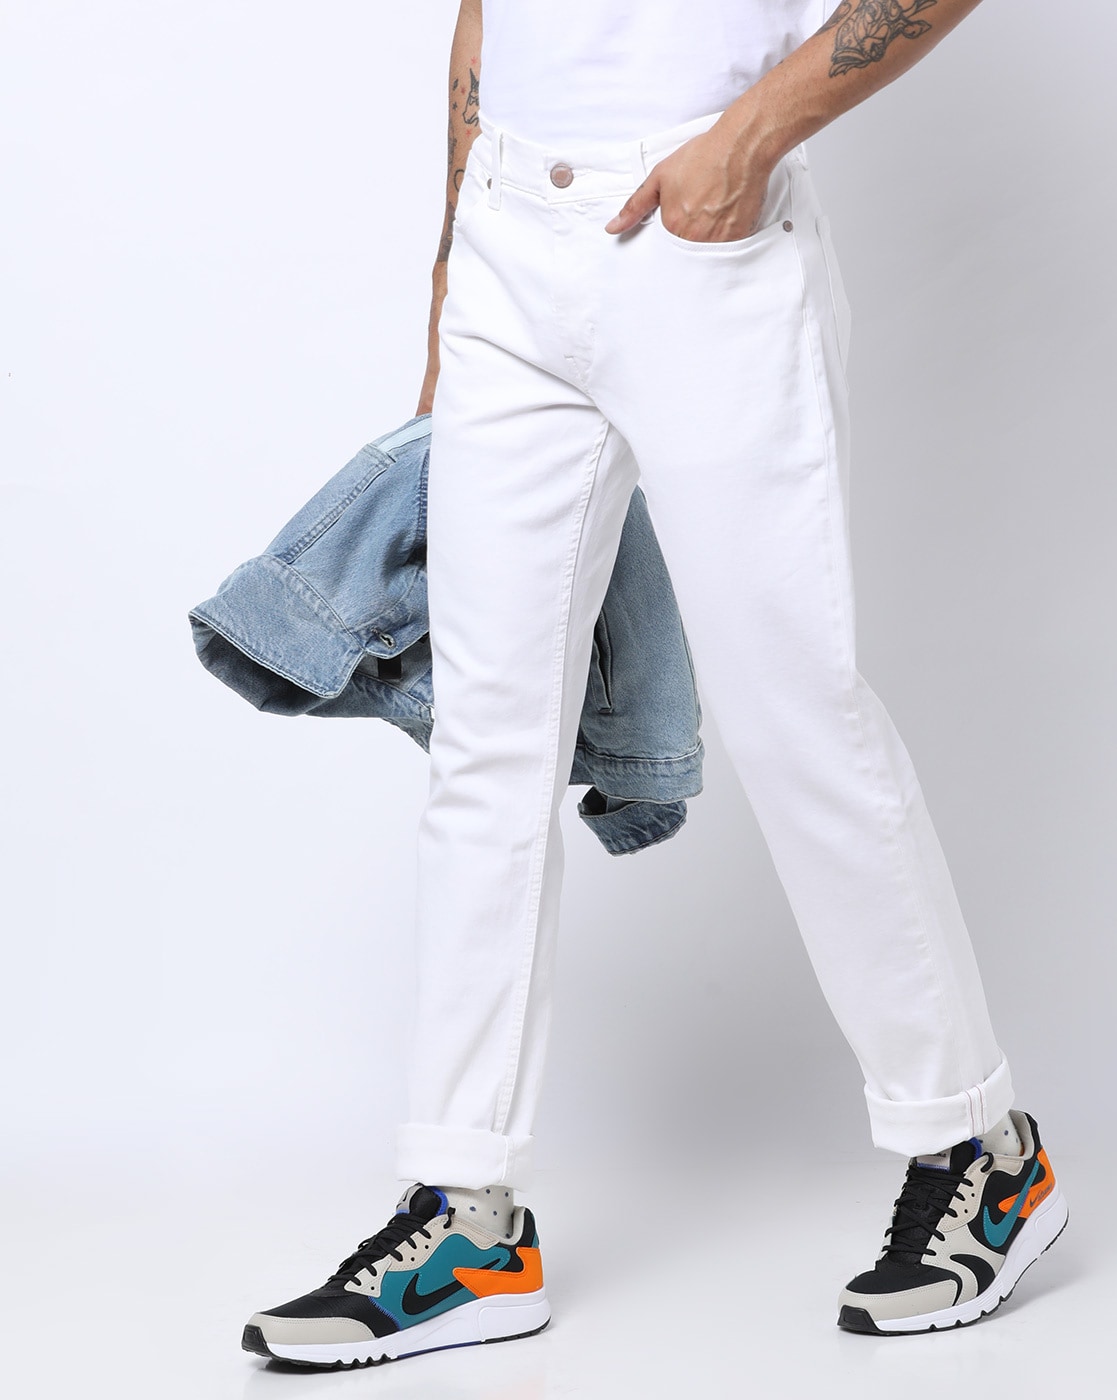 levi's white jeans men